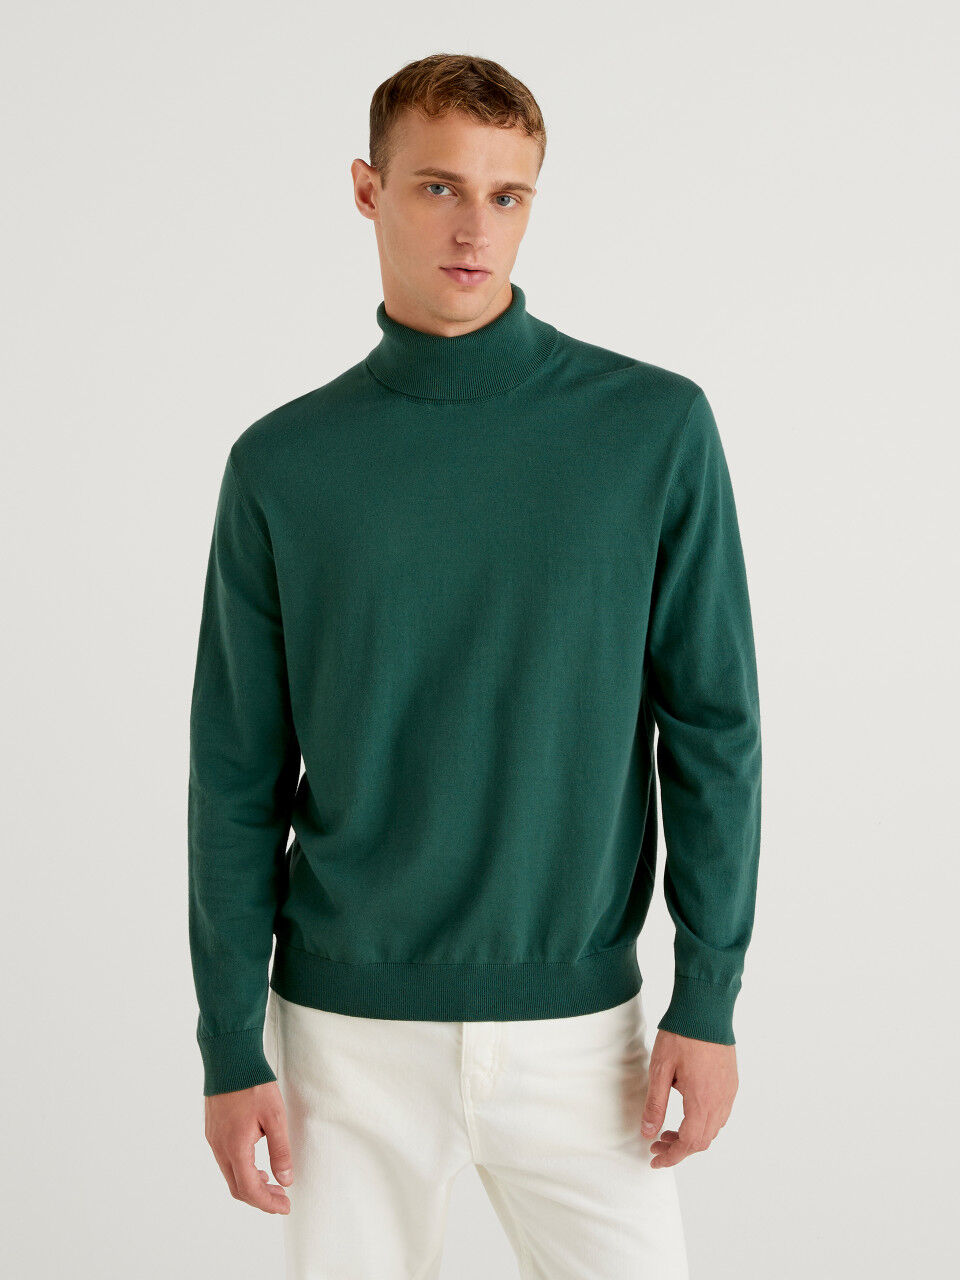 United Colors of Benetton Cotton Blend Longsleeve Sweater Sudadera para Bebés 